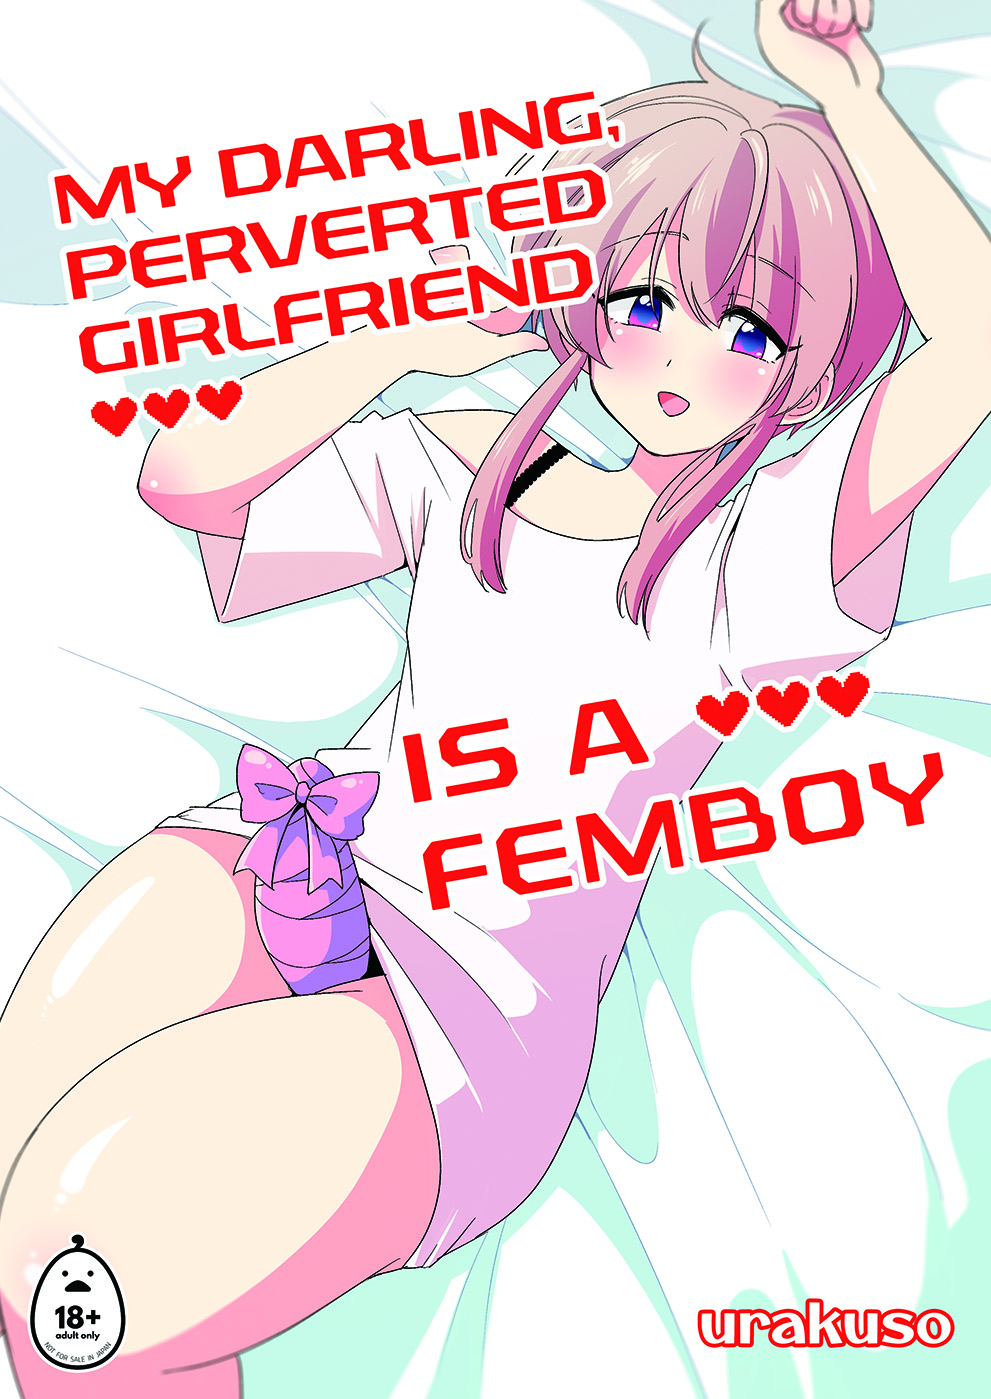 Femboy hub on X: A new femboy hentai doujinshi brought by @irodoricomics  t.co7cuJyL5oj0 t.coyPzz84S9II  X